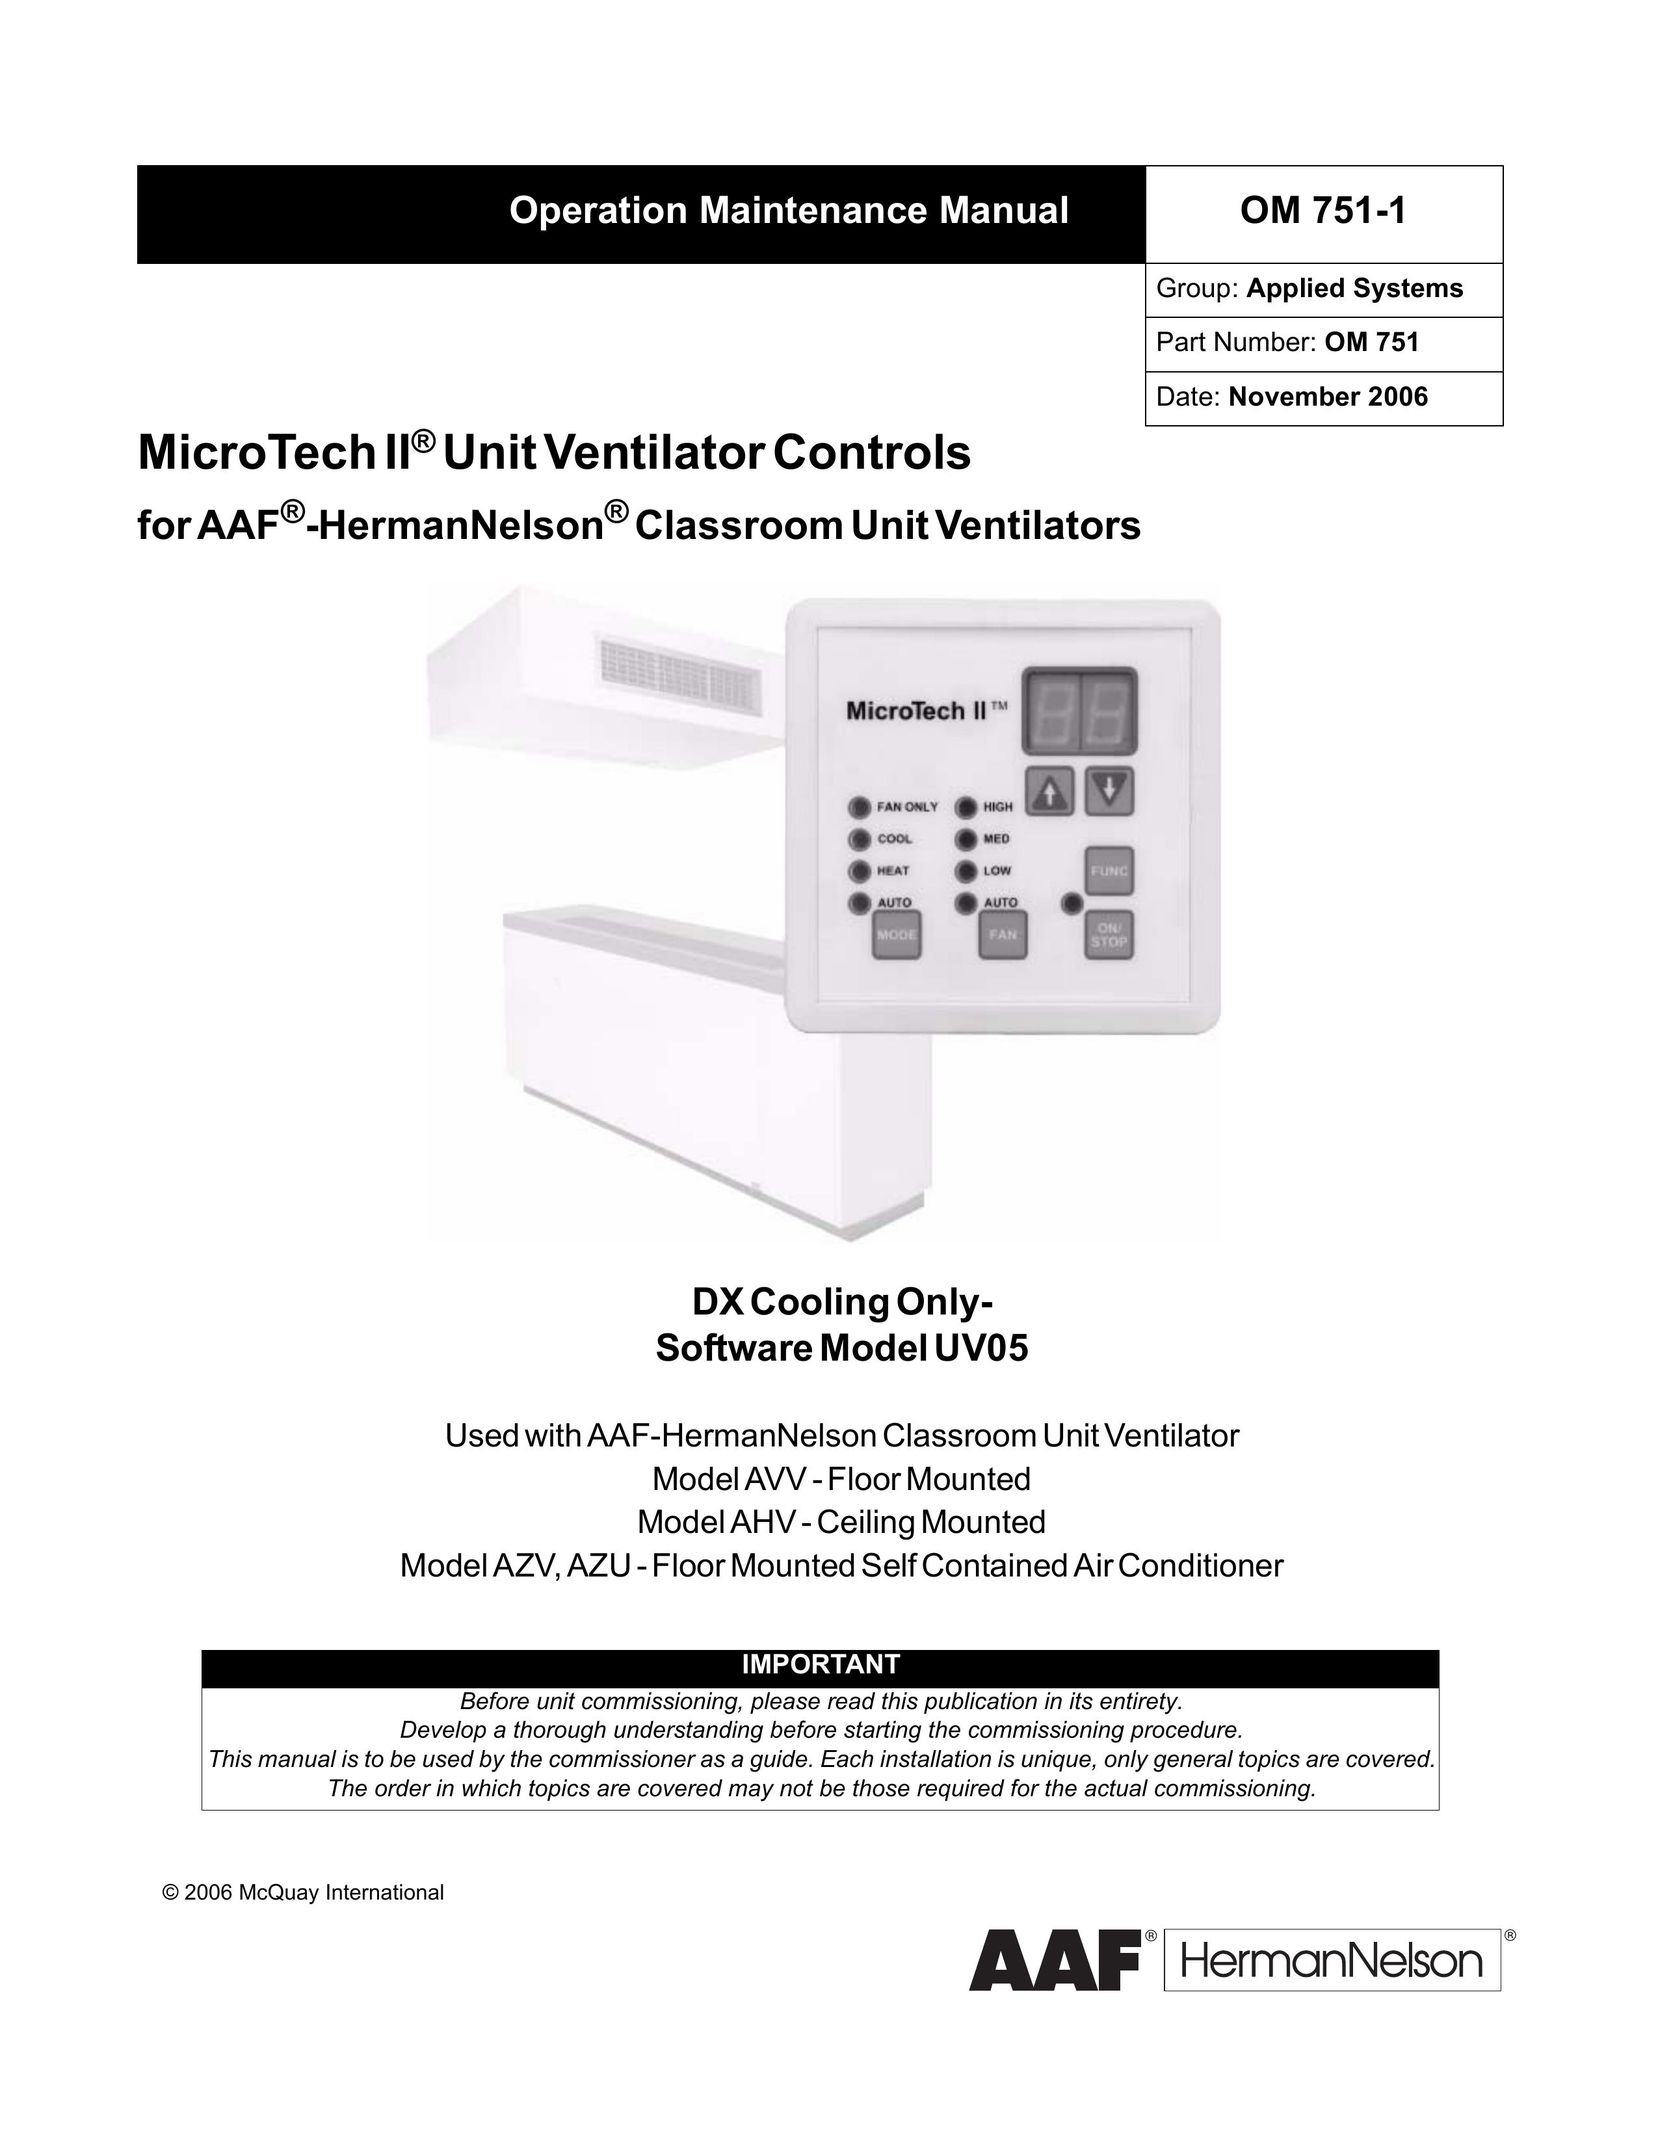 American Standard UV05 Air Conditioner User Manual